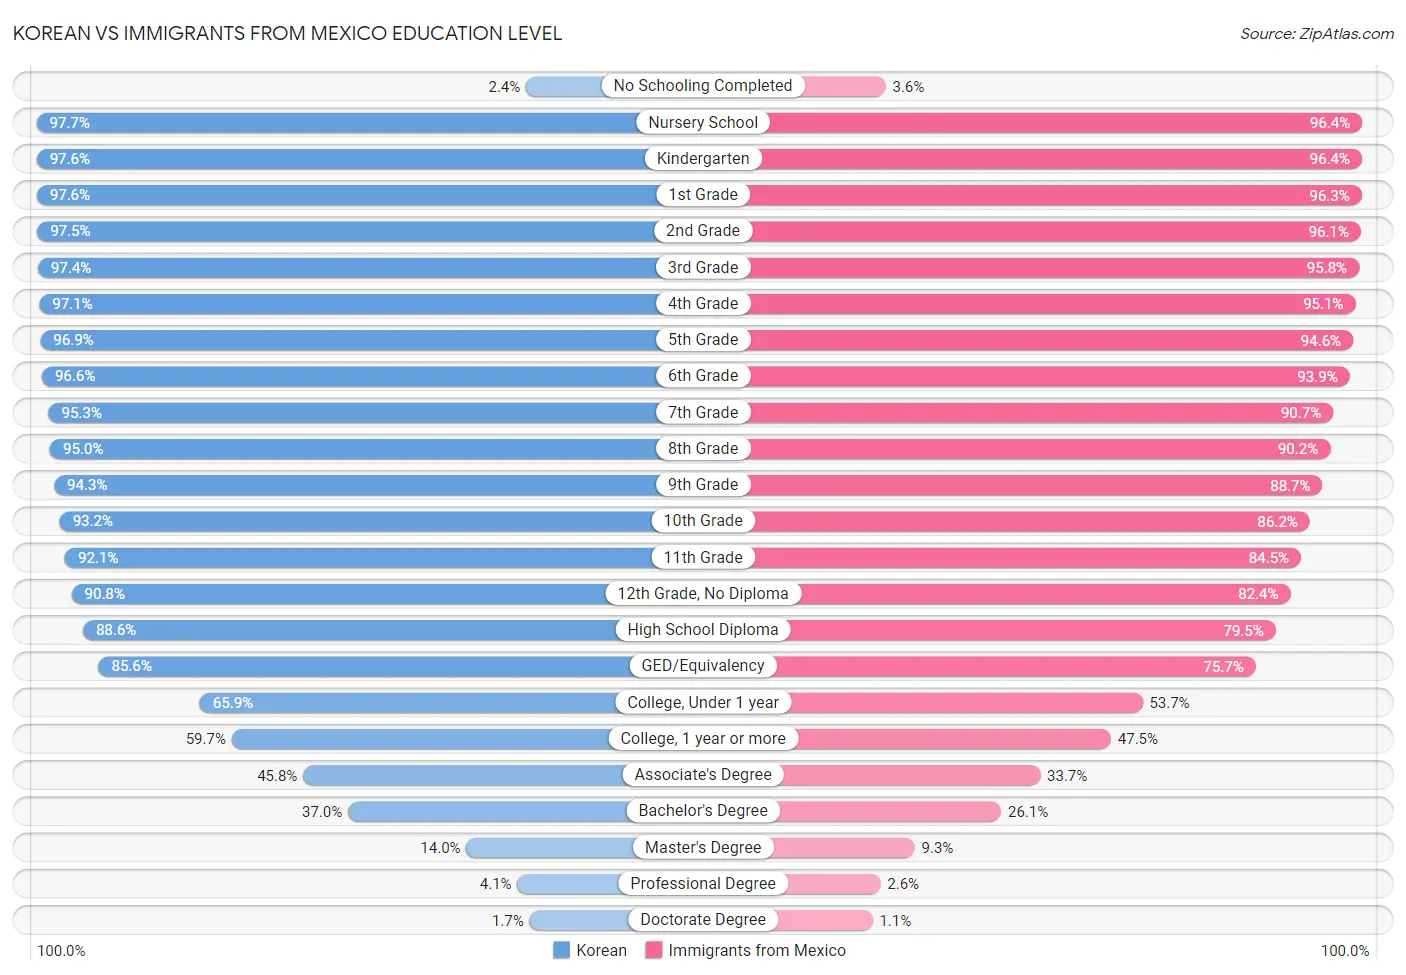 Korean vs Immigrants from Mexico Education Level